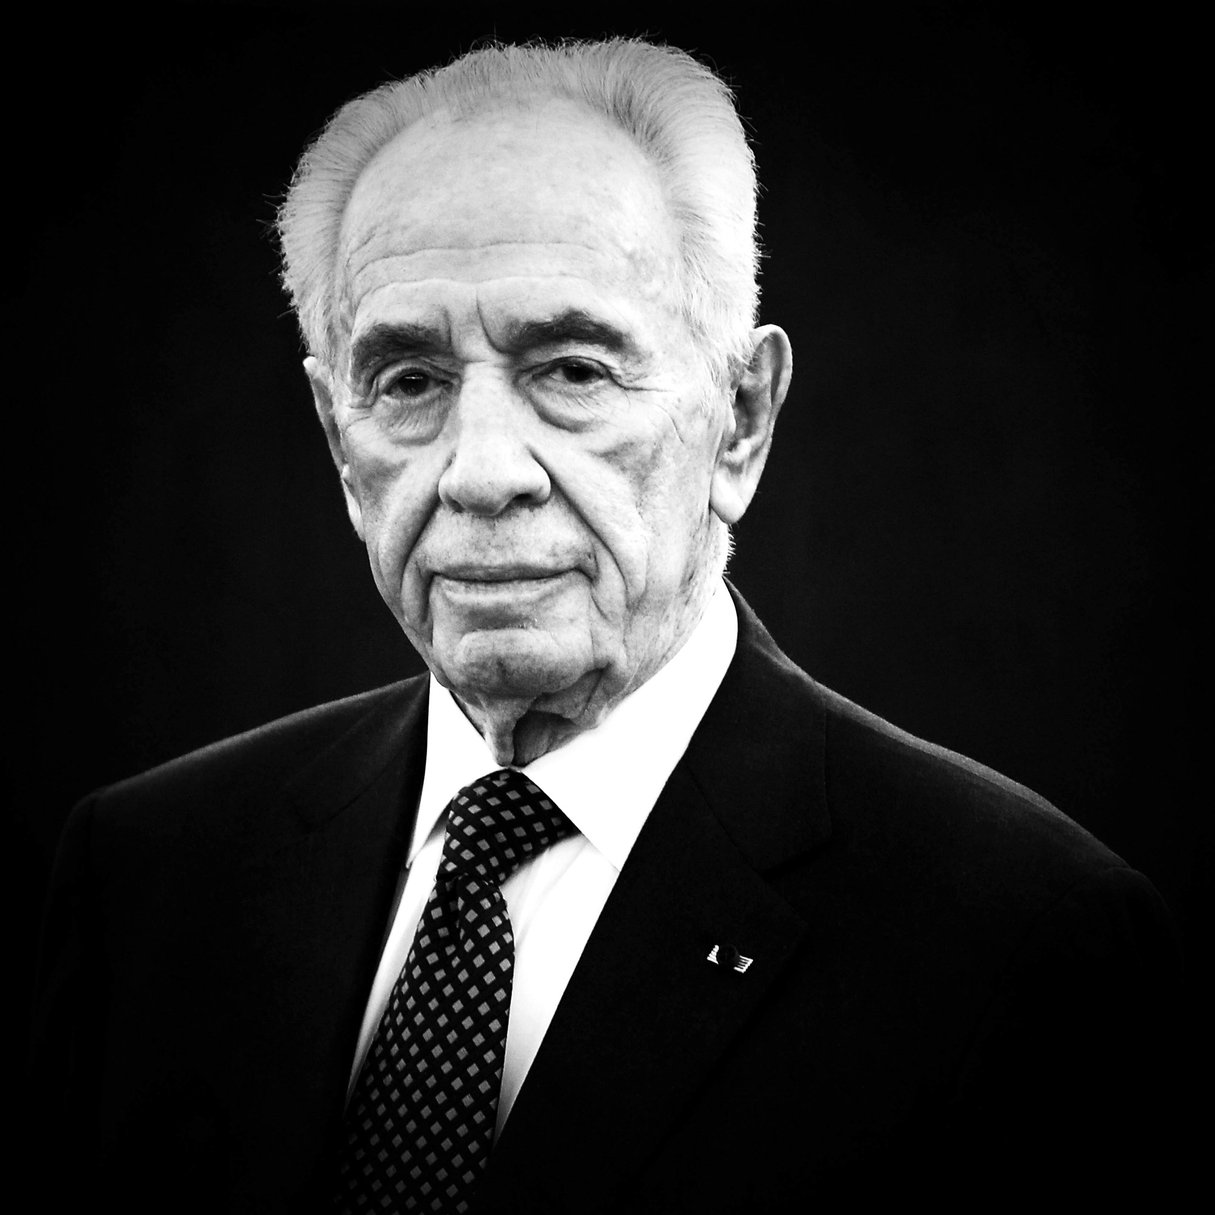 Visite de Shimon Peres, president d’Israel au Parlement Europeen de Strasbourg © Fred MARVAUX/REA